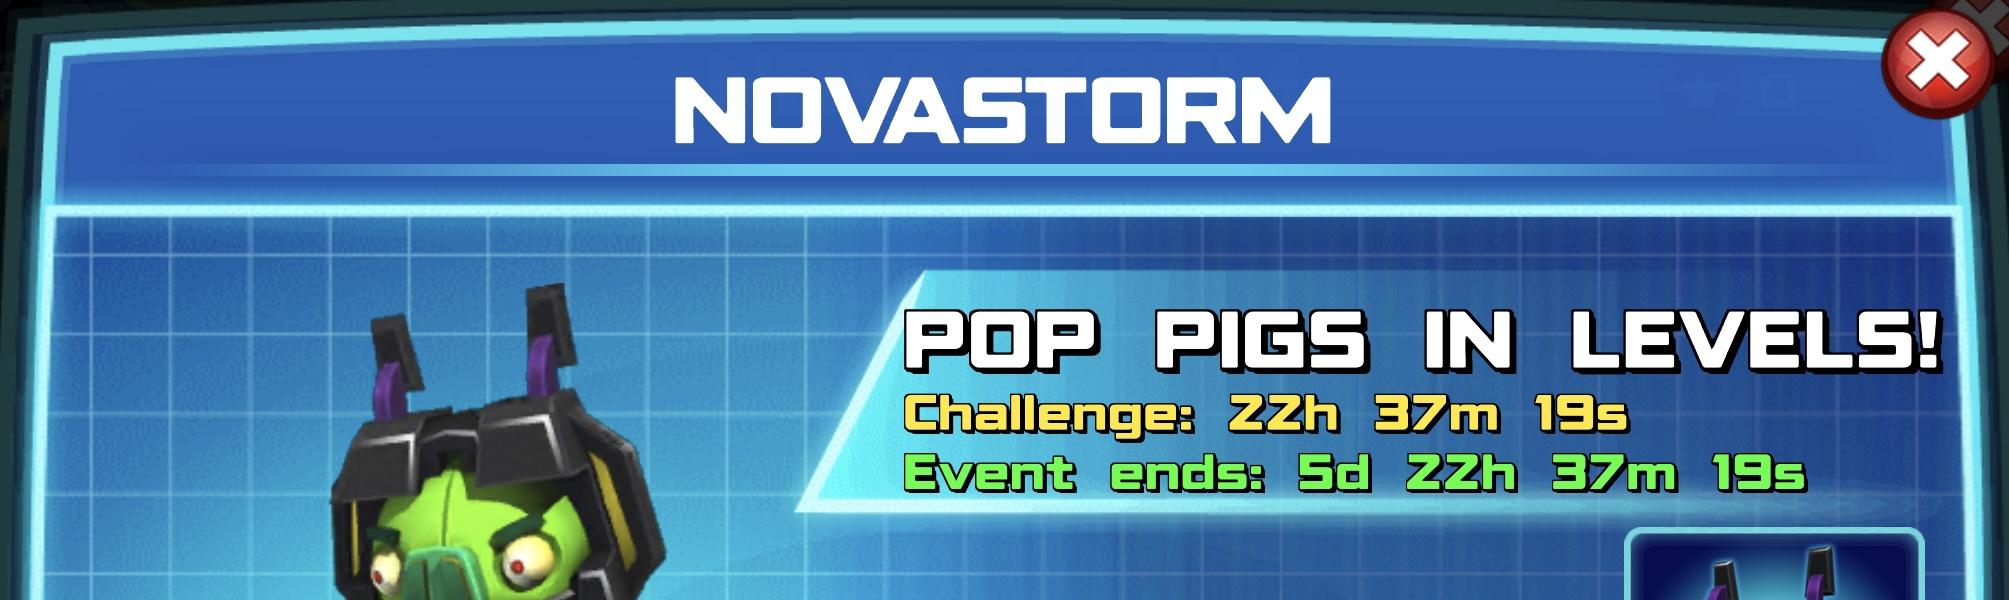 The event banner for Novastorm